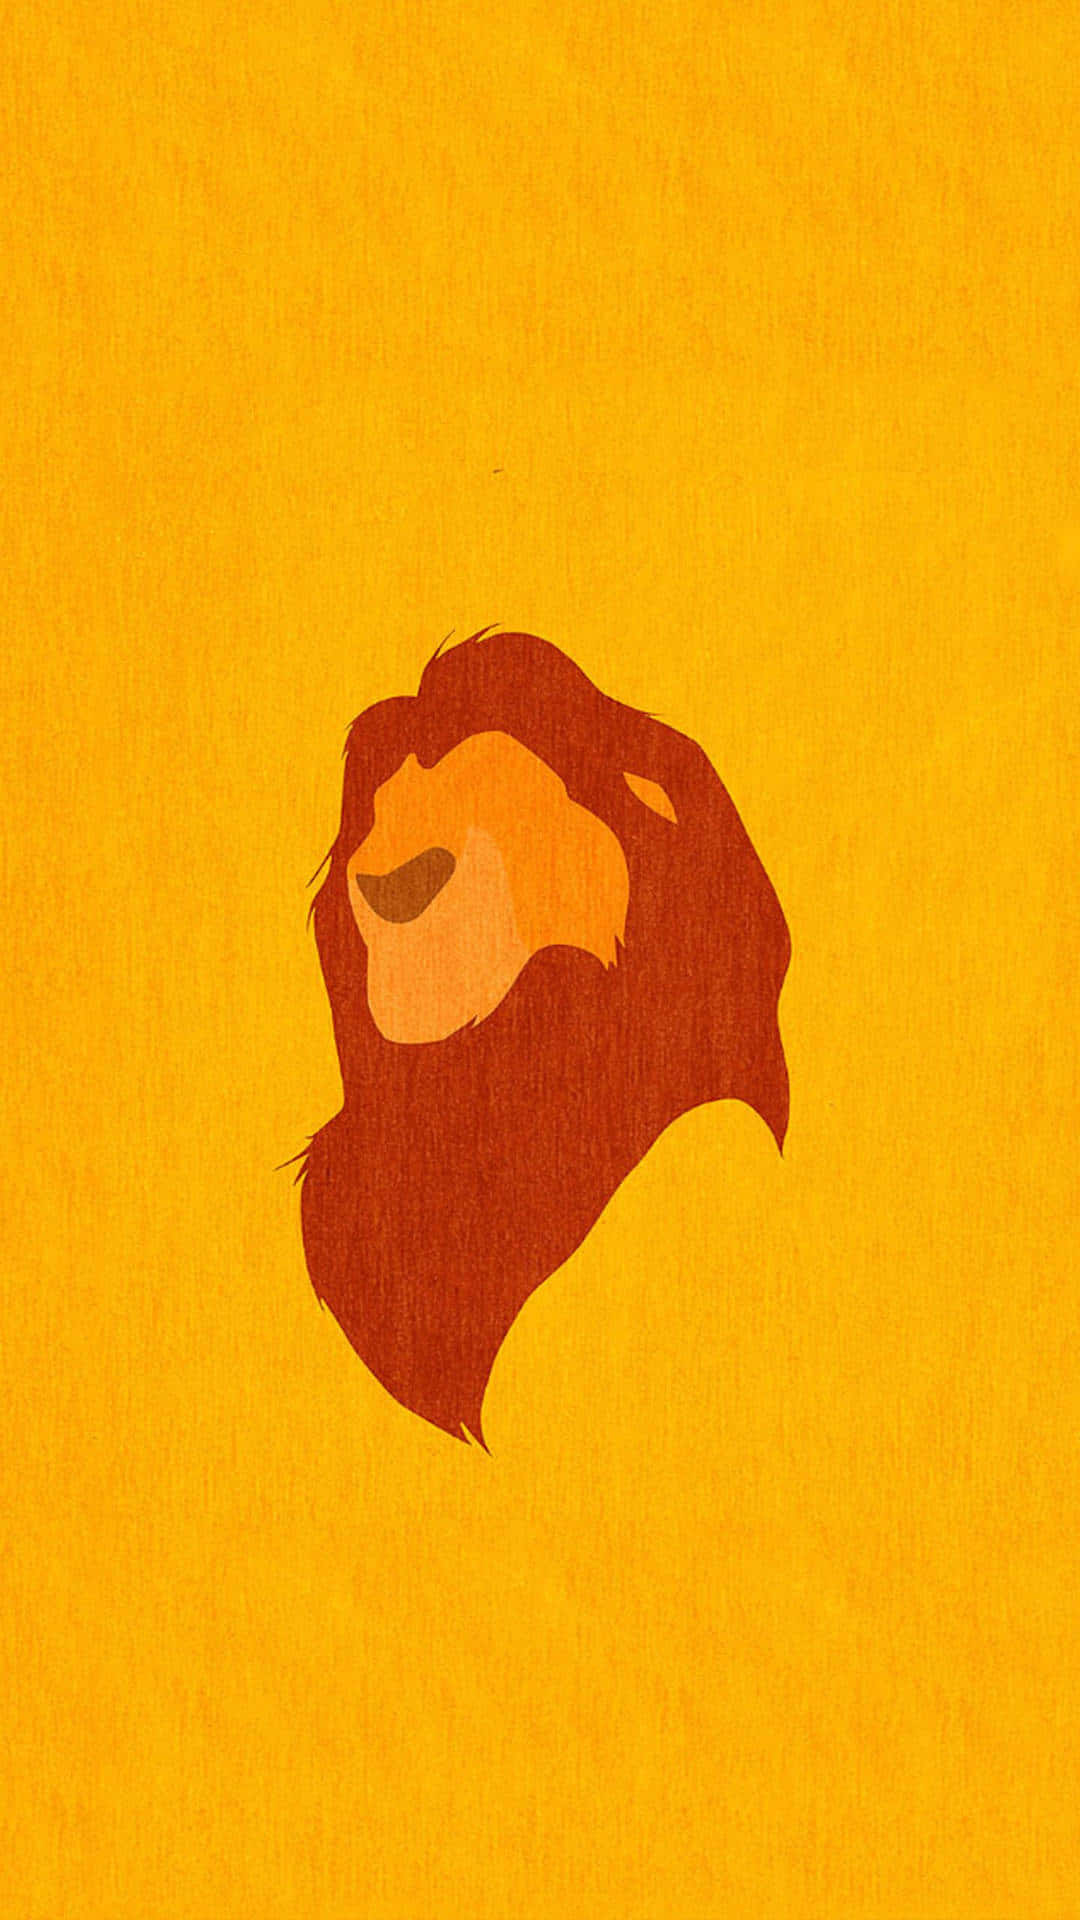 Simba Iconic Lion King Silhouette Wallpaper